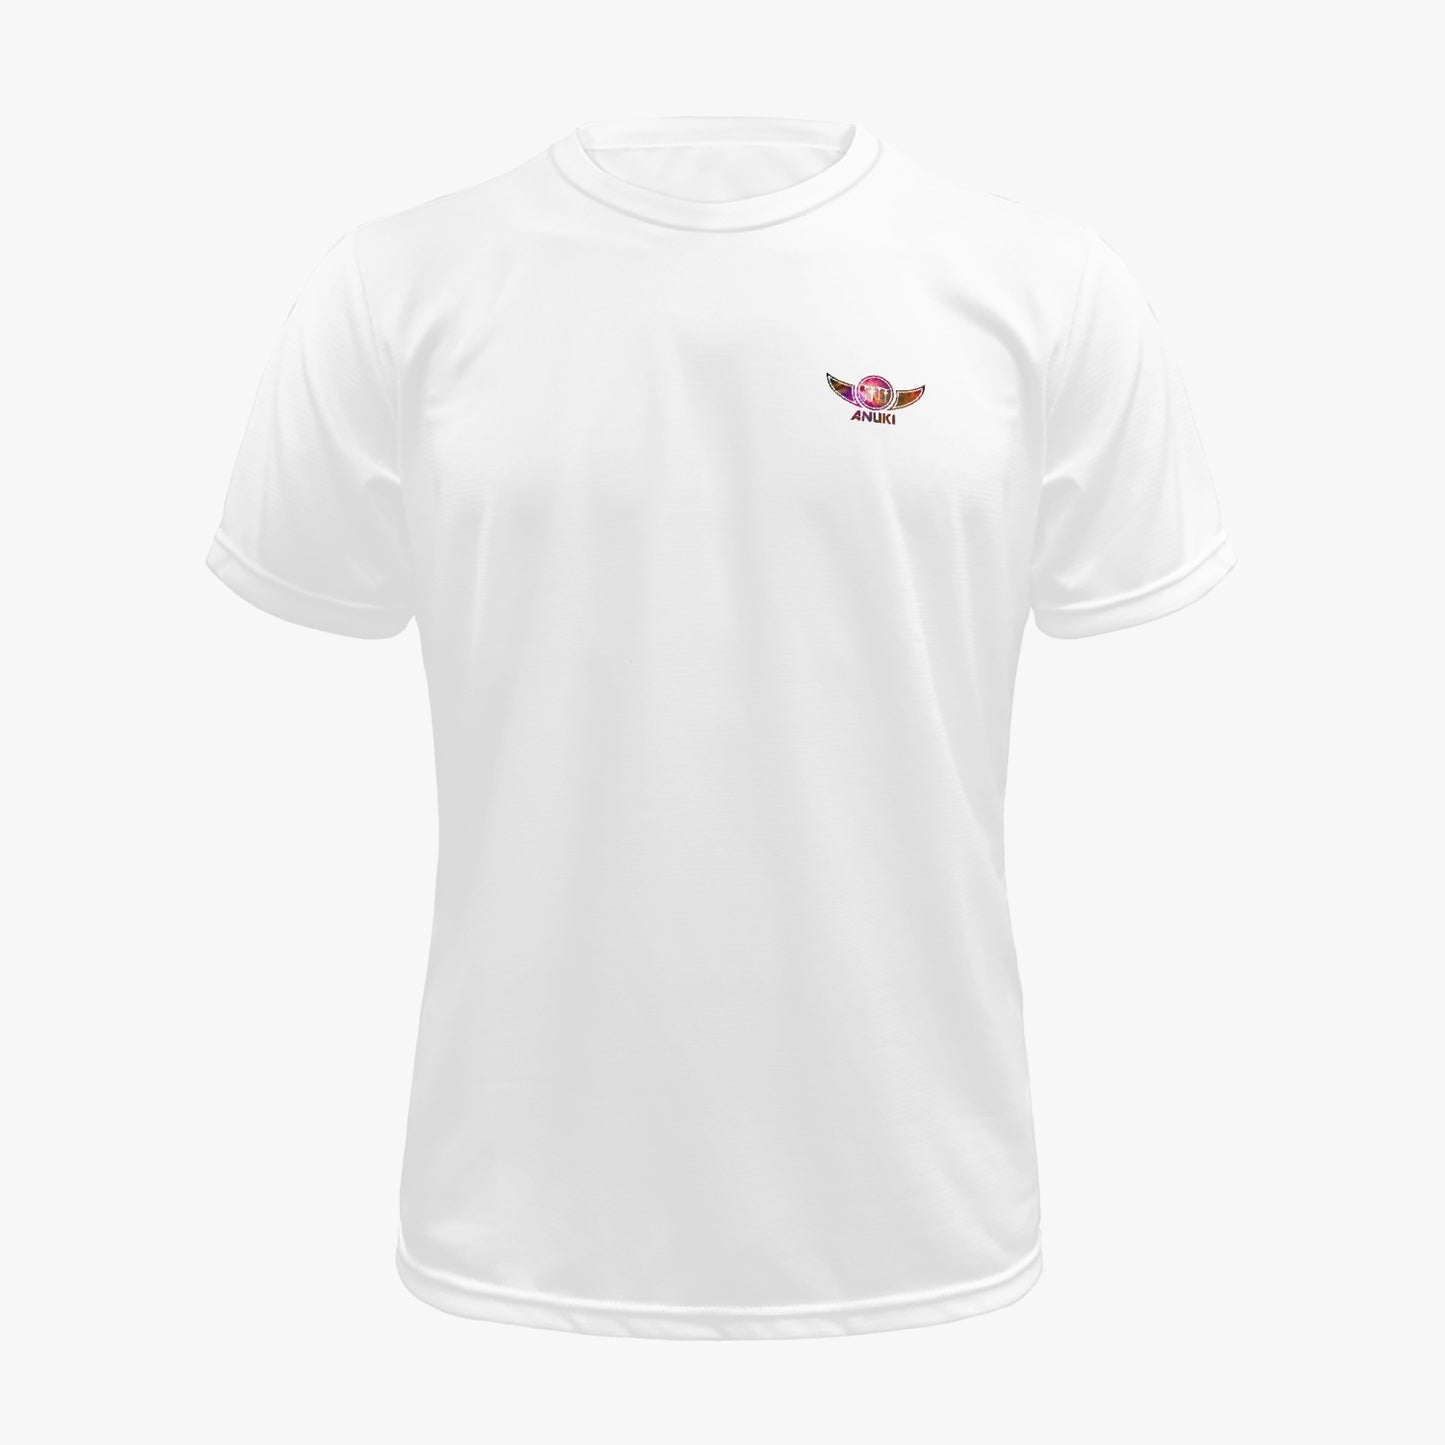 The Orion KiTech T-Shirt White